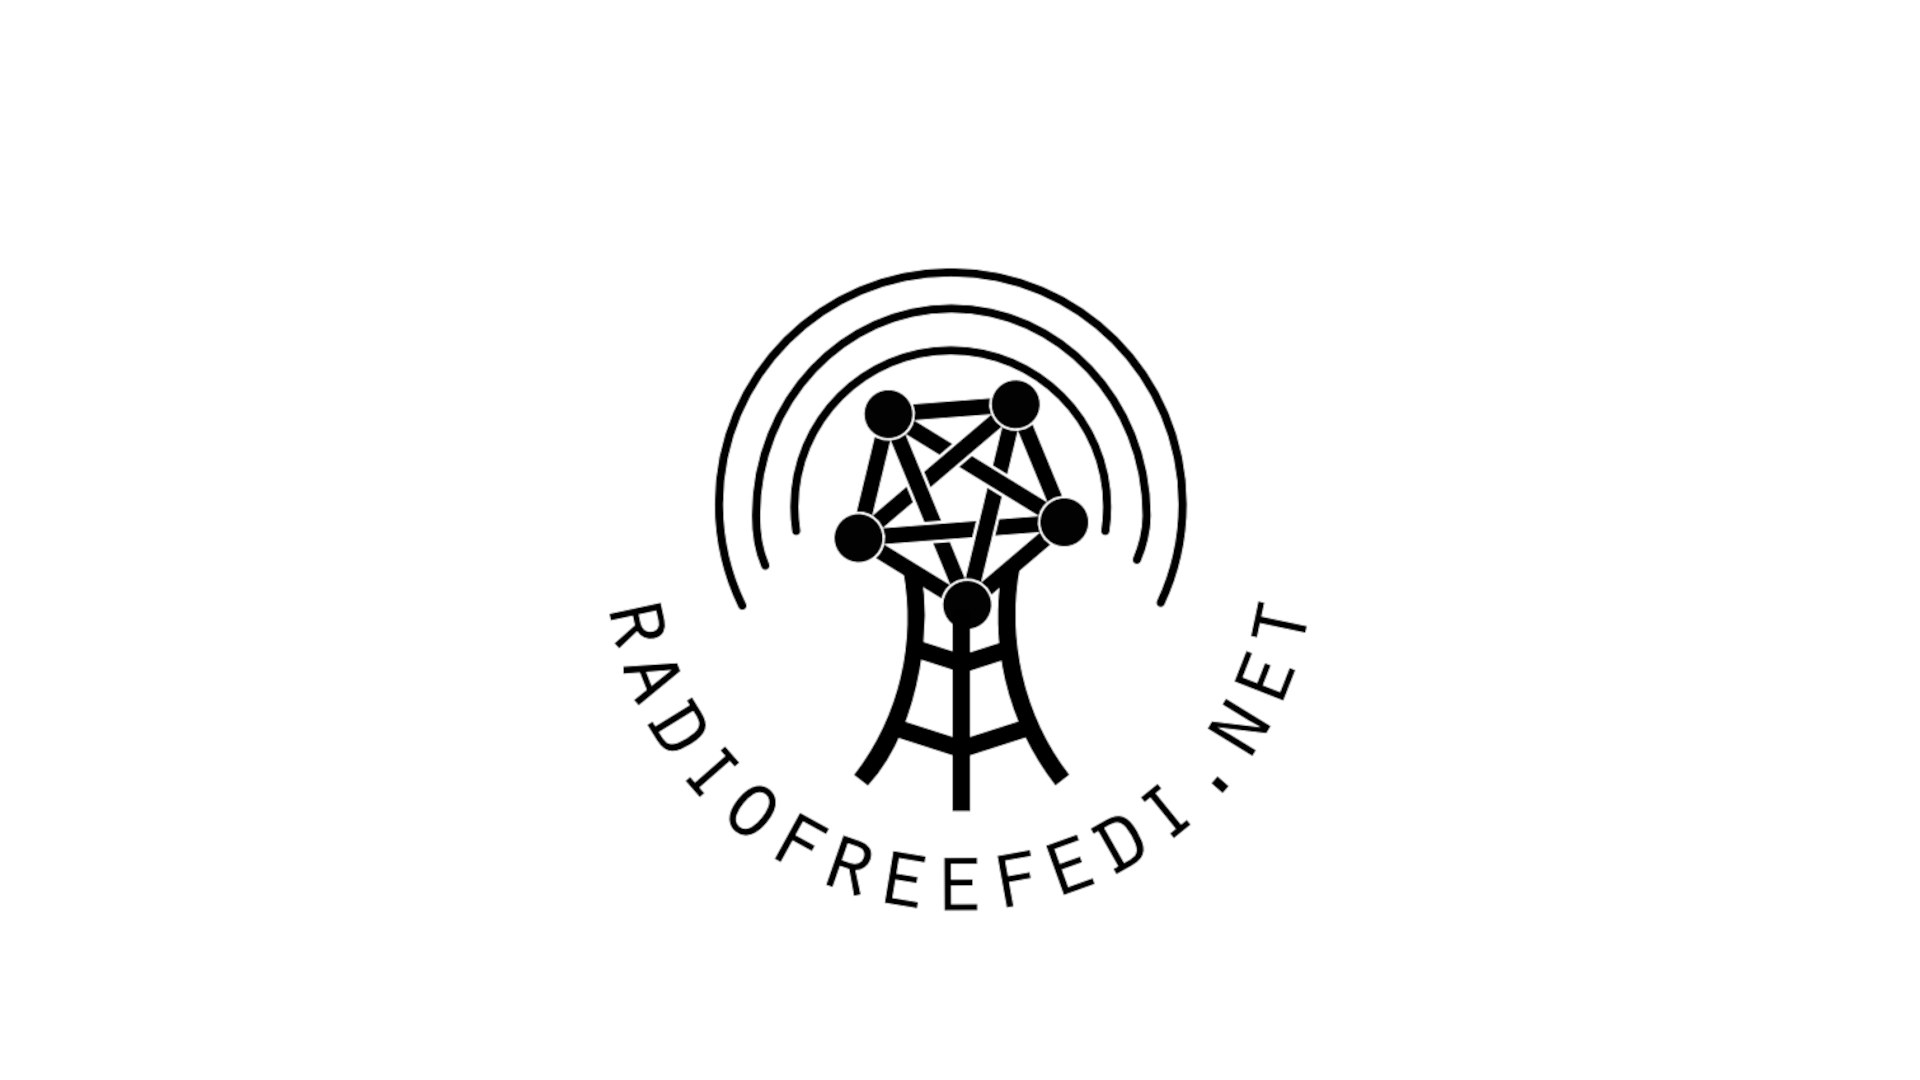 radio free fedi wallpaper 1080p white background with black tower logo